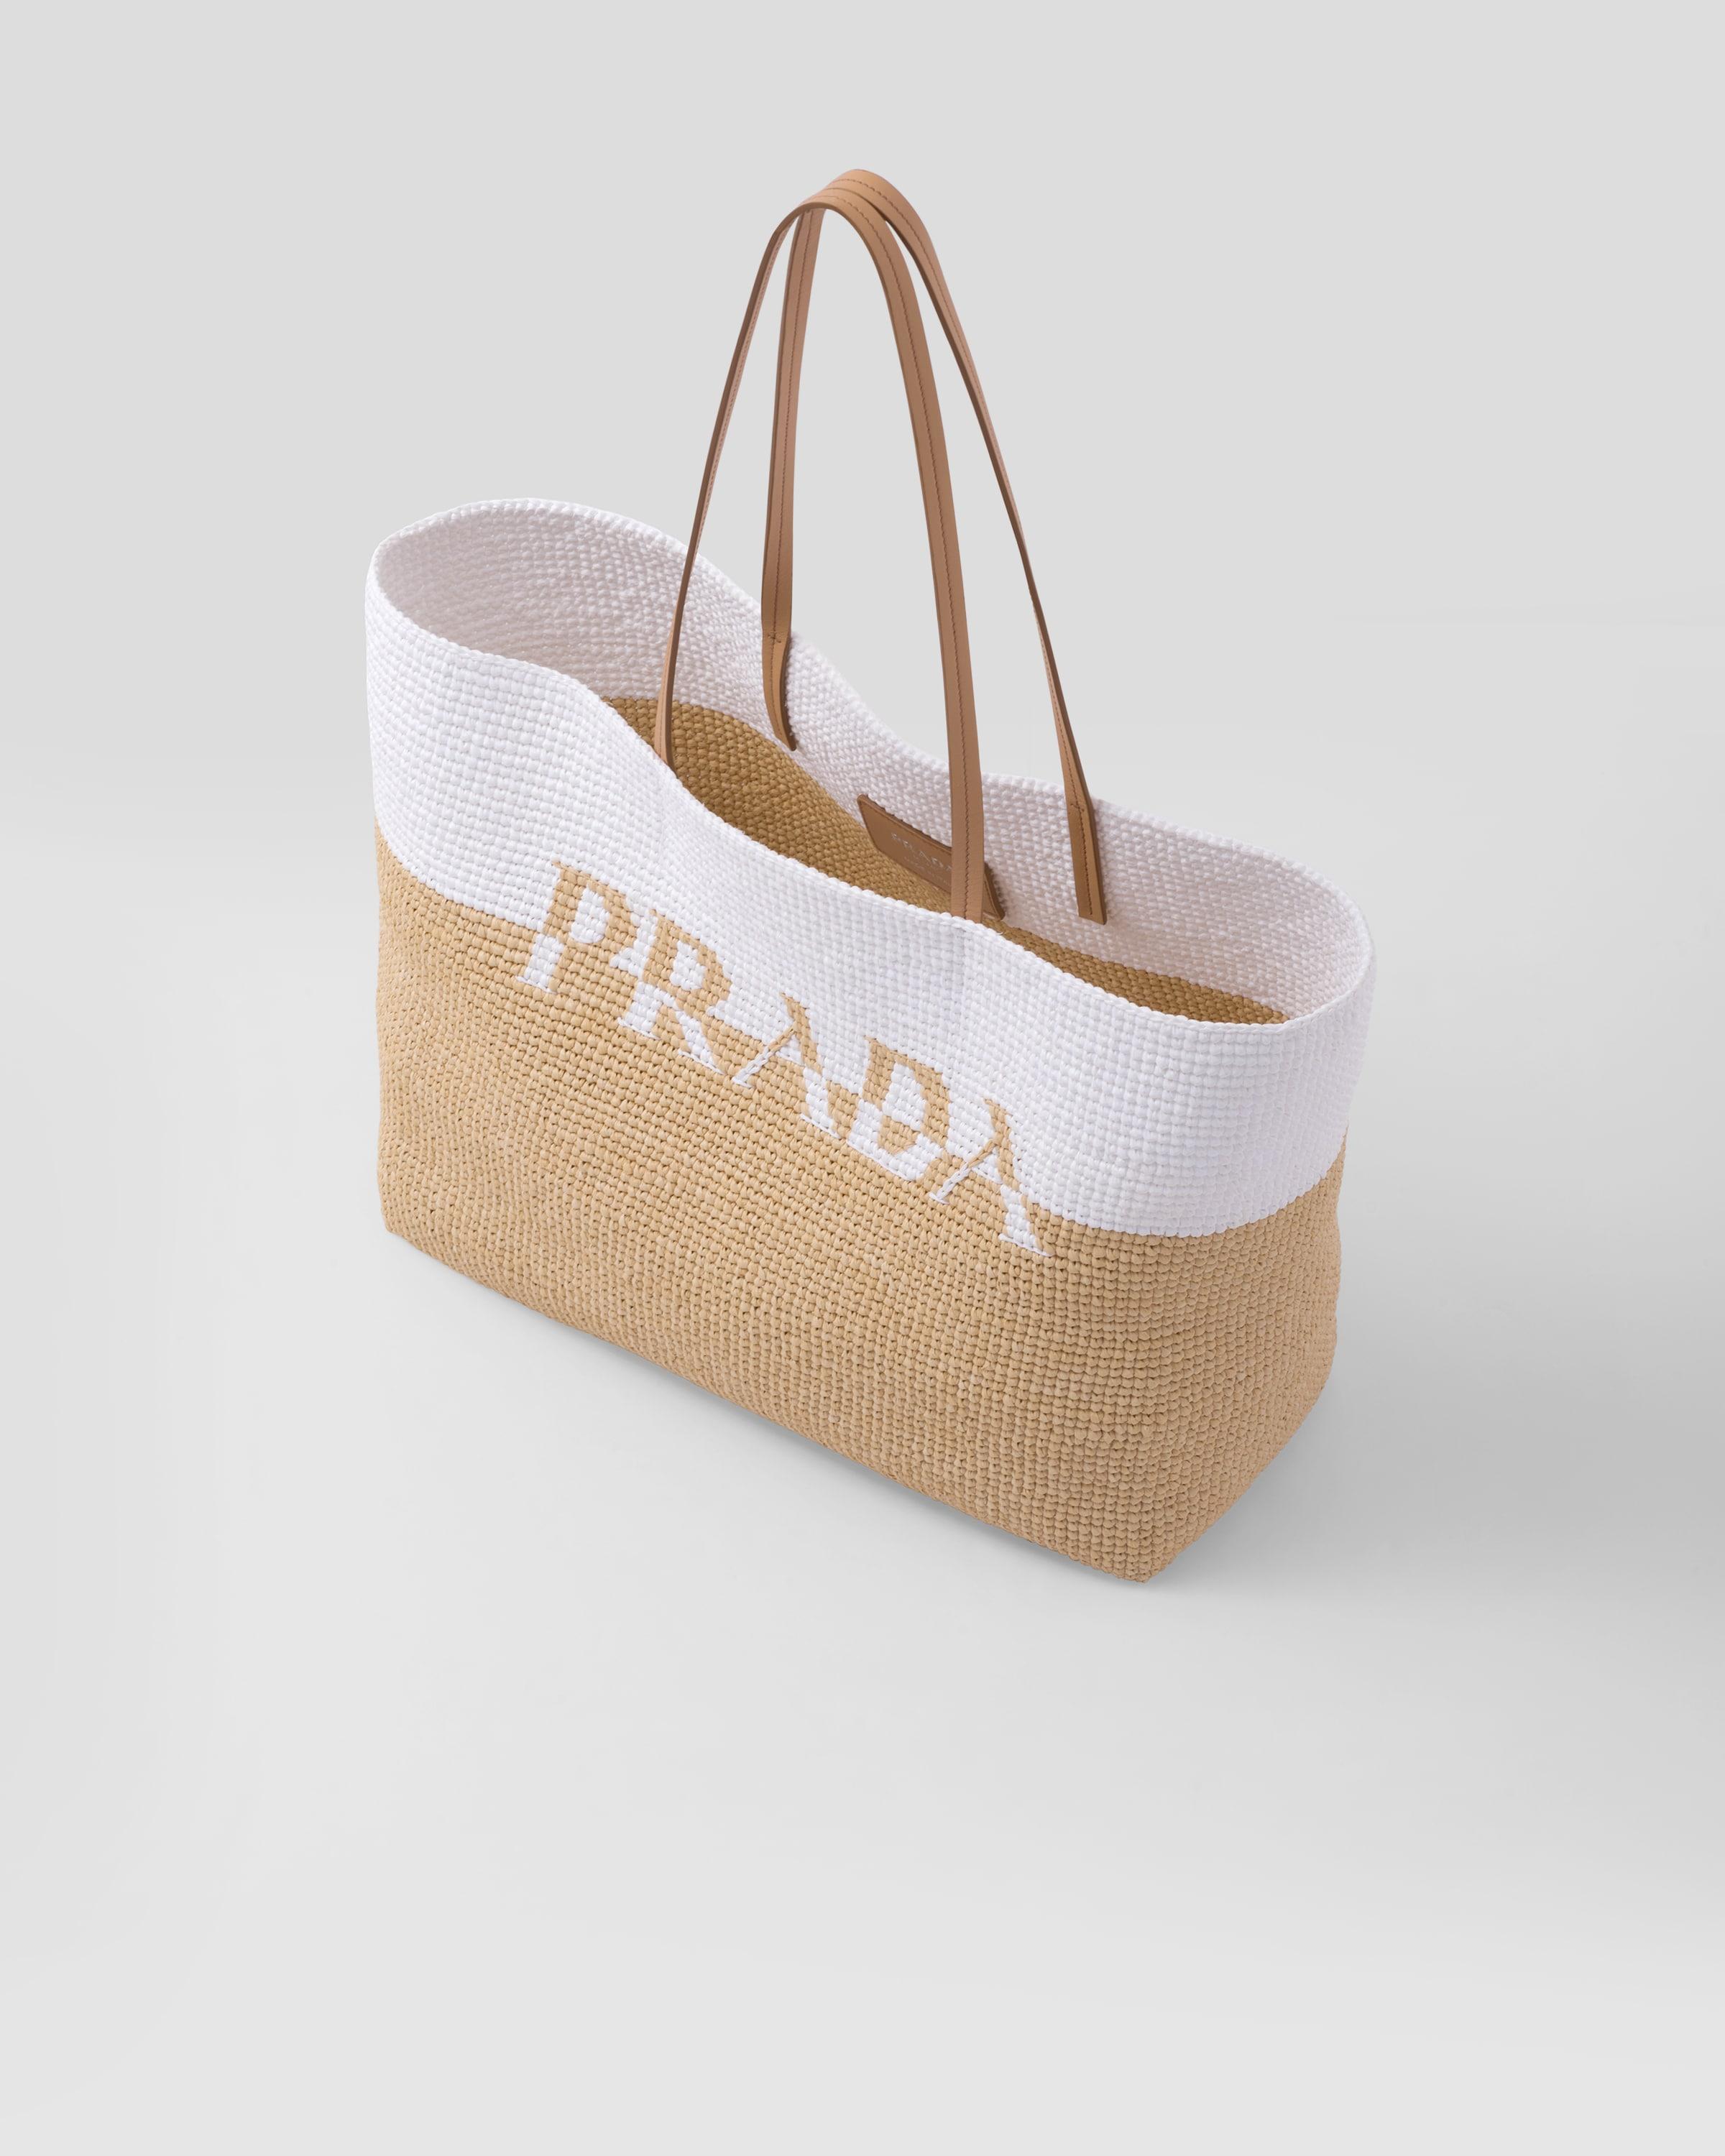 Prada Raffia And Leather Tote Bag in White | Lyst